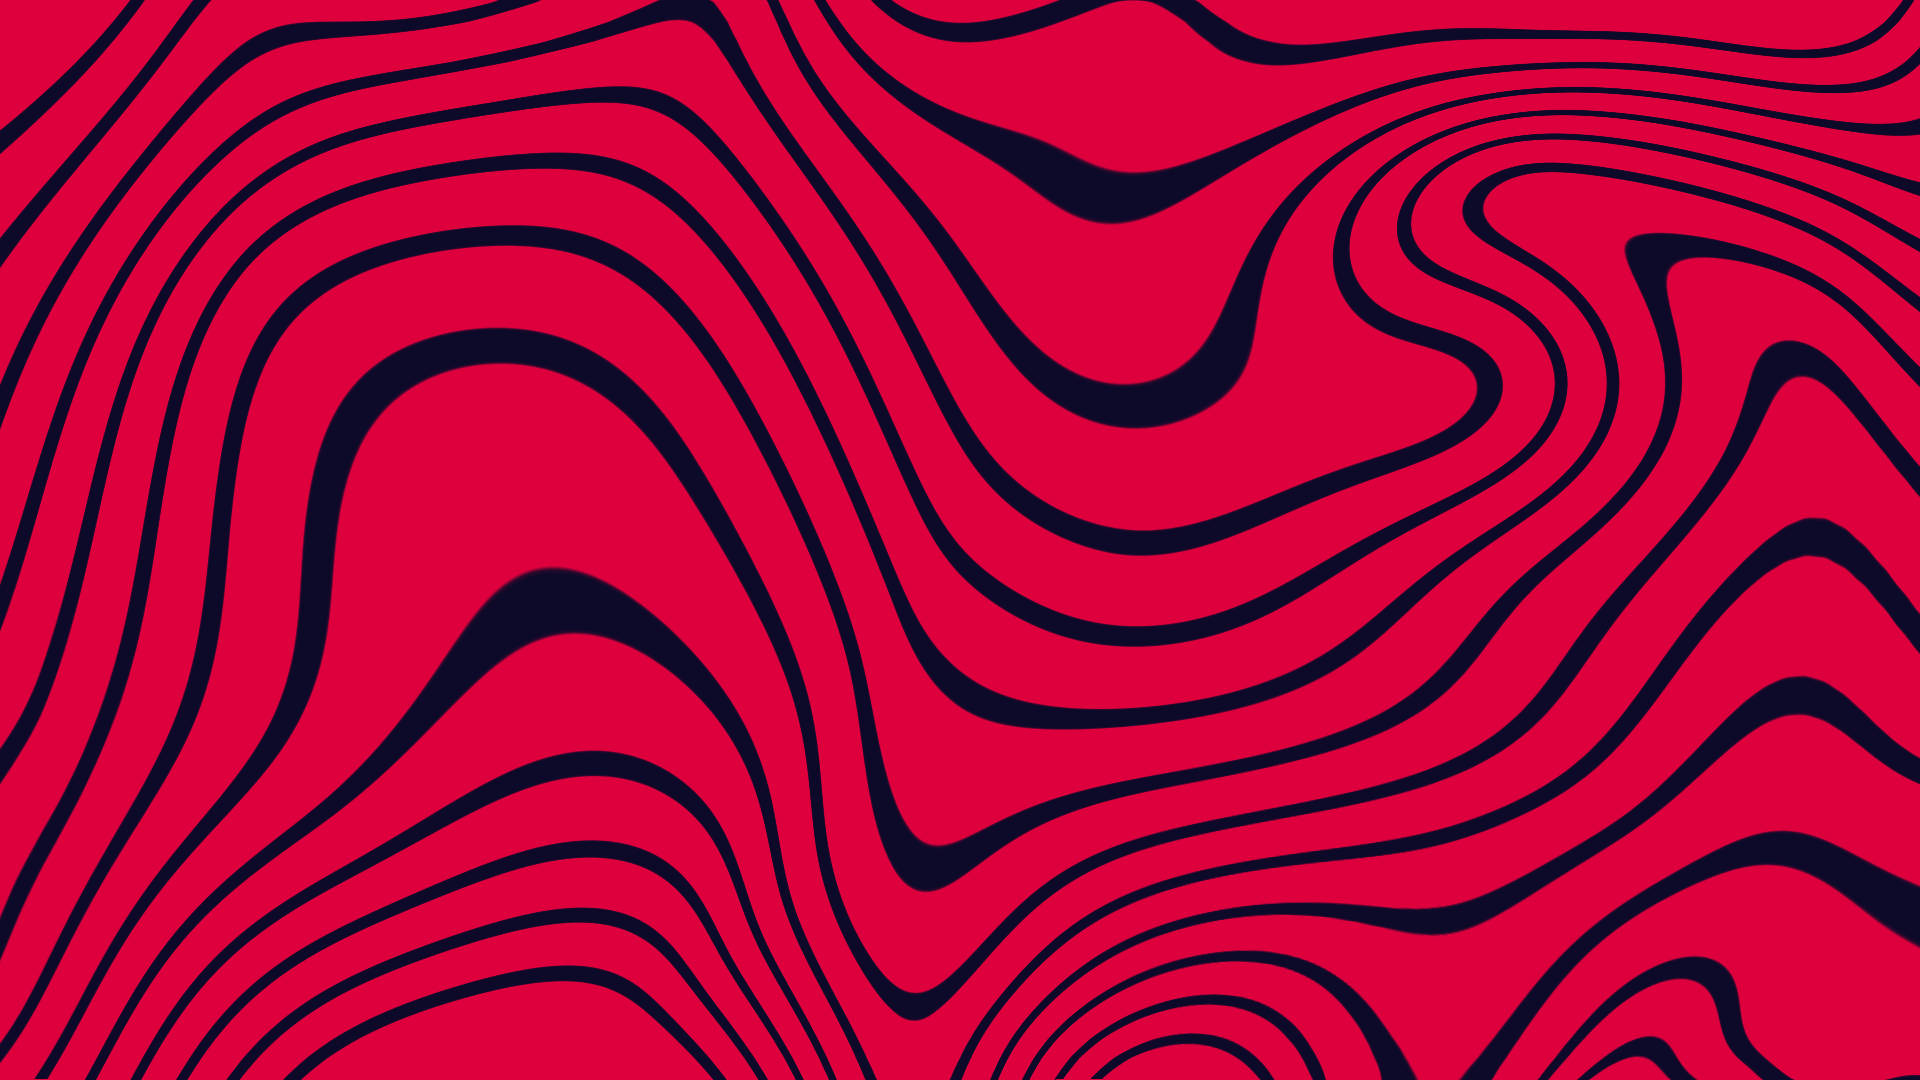 Dynamic Swirls Pattern by PewDiePie Wallpaper